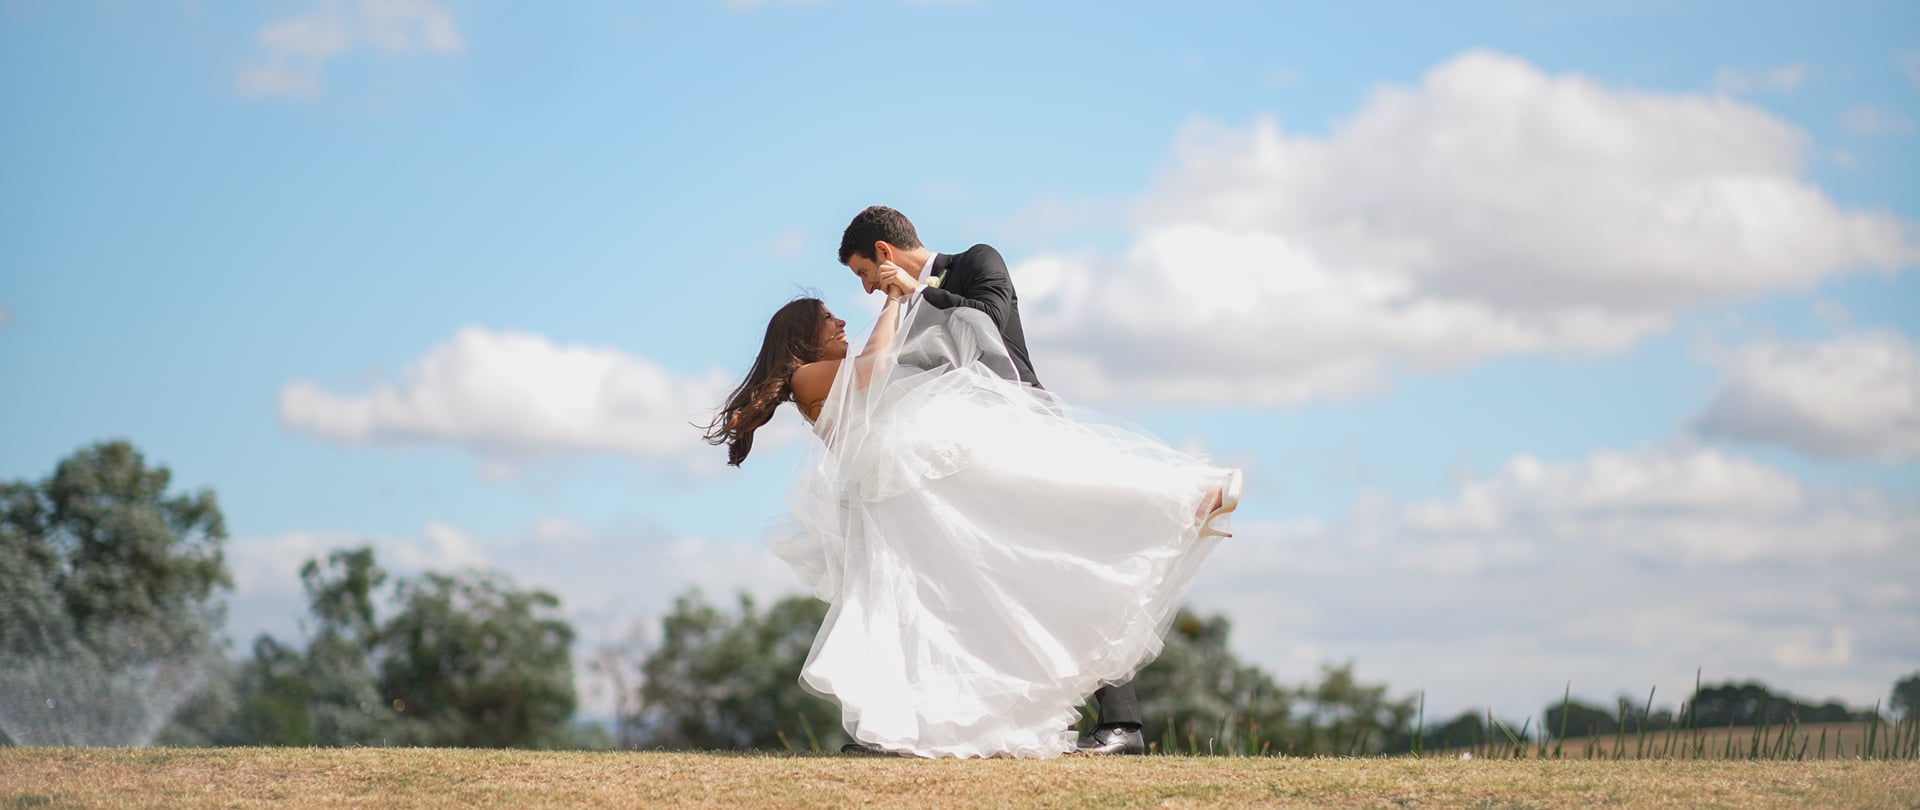 Hayley & Ben Wedding Video Filmed atYarra Valley,Victoria